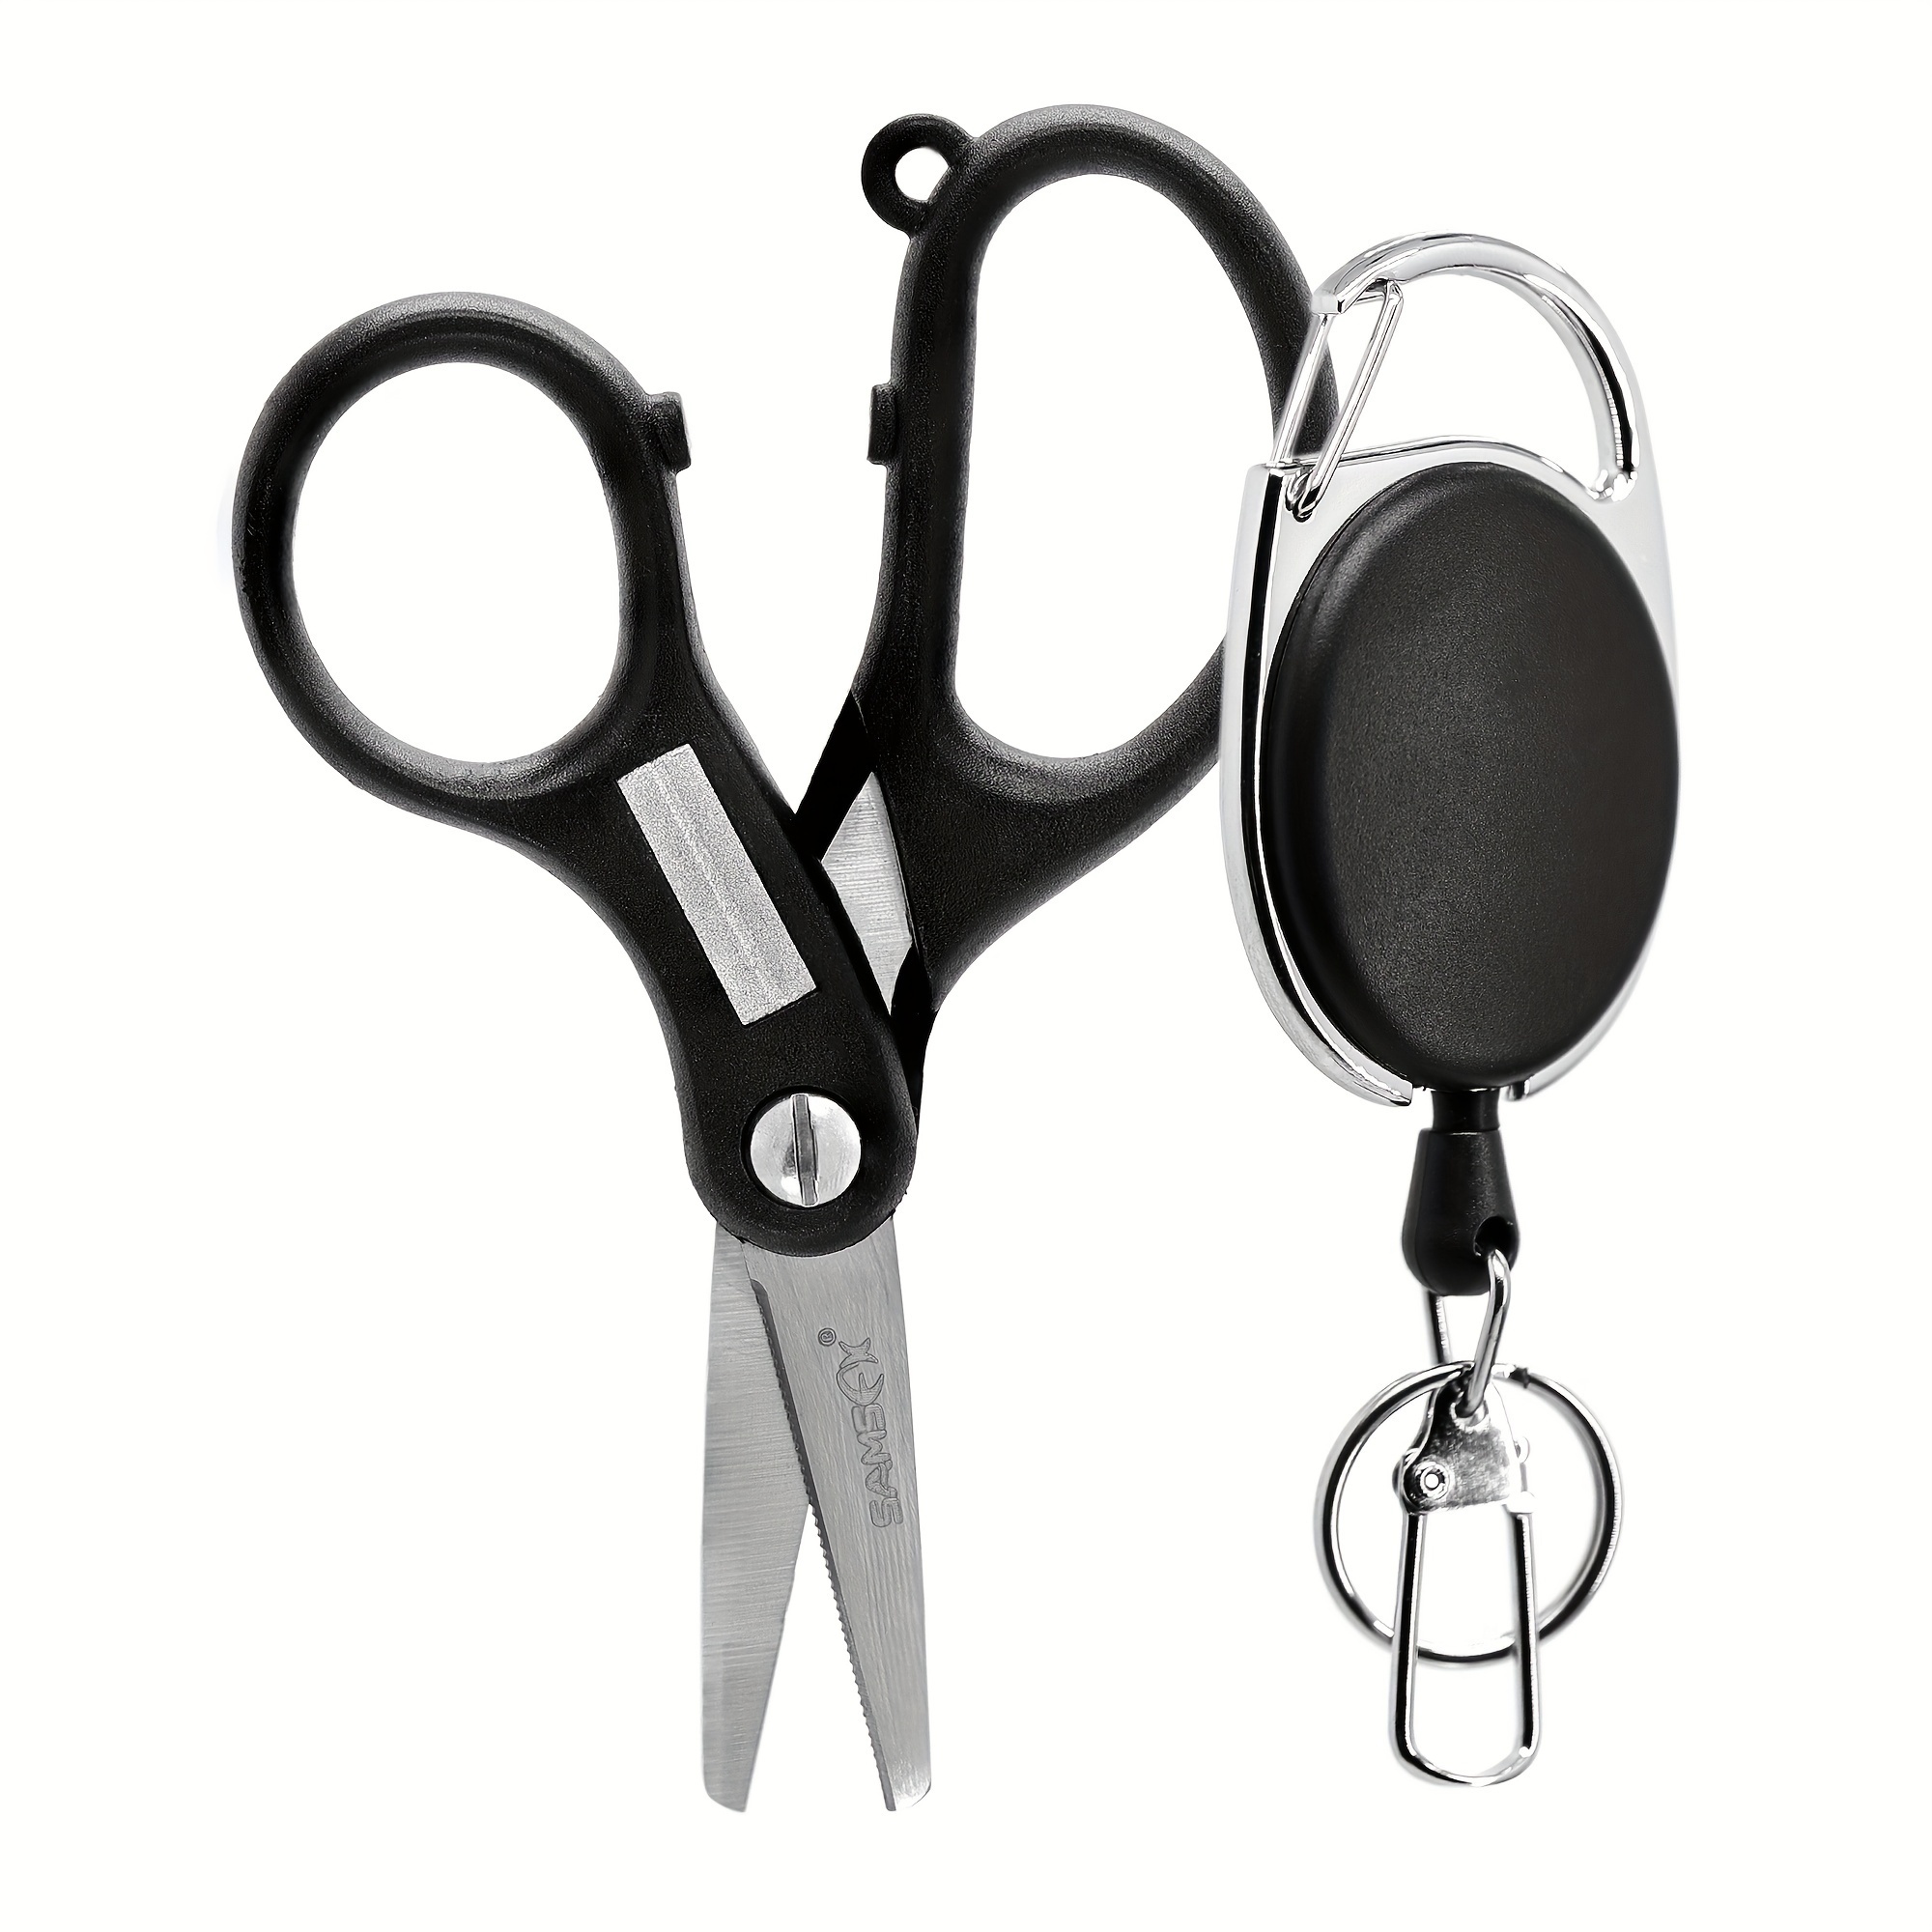 Buy Fishing Line Scissors,Fishing Scissors, Stainless Steel